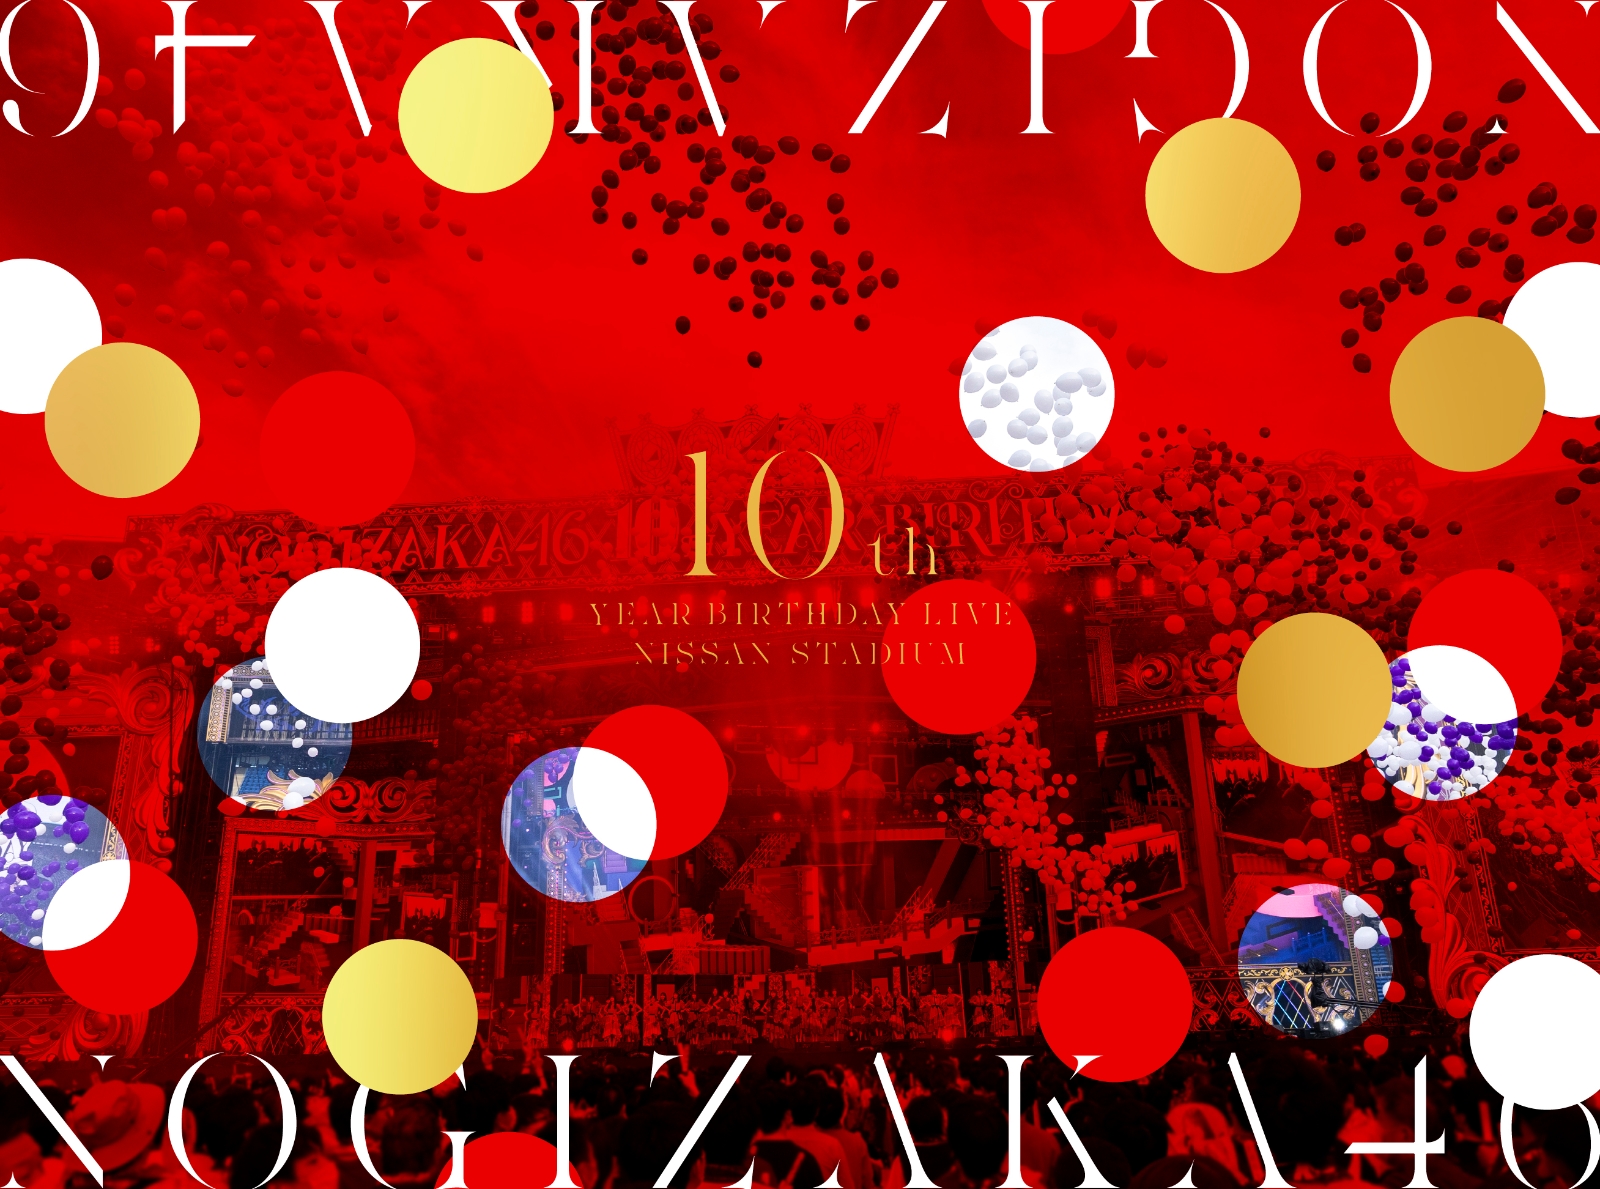 乃木坂46 2ND YEAR BIRTHDAY LIVE Blu-ray | hmgrocerant.com